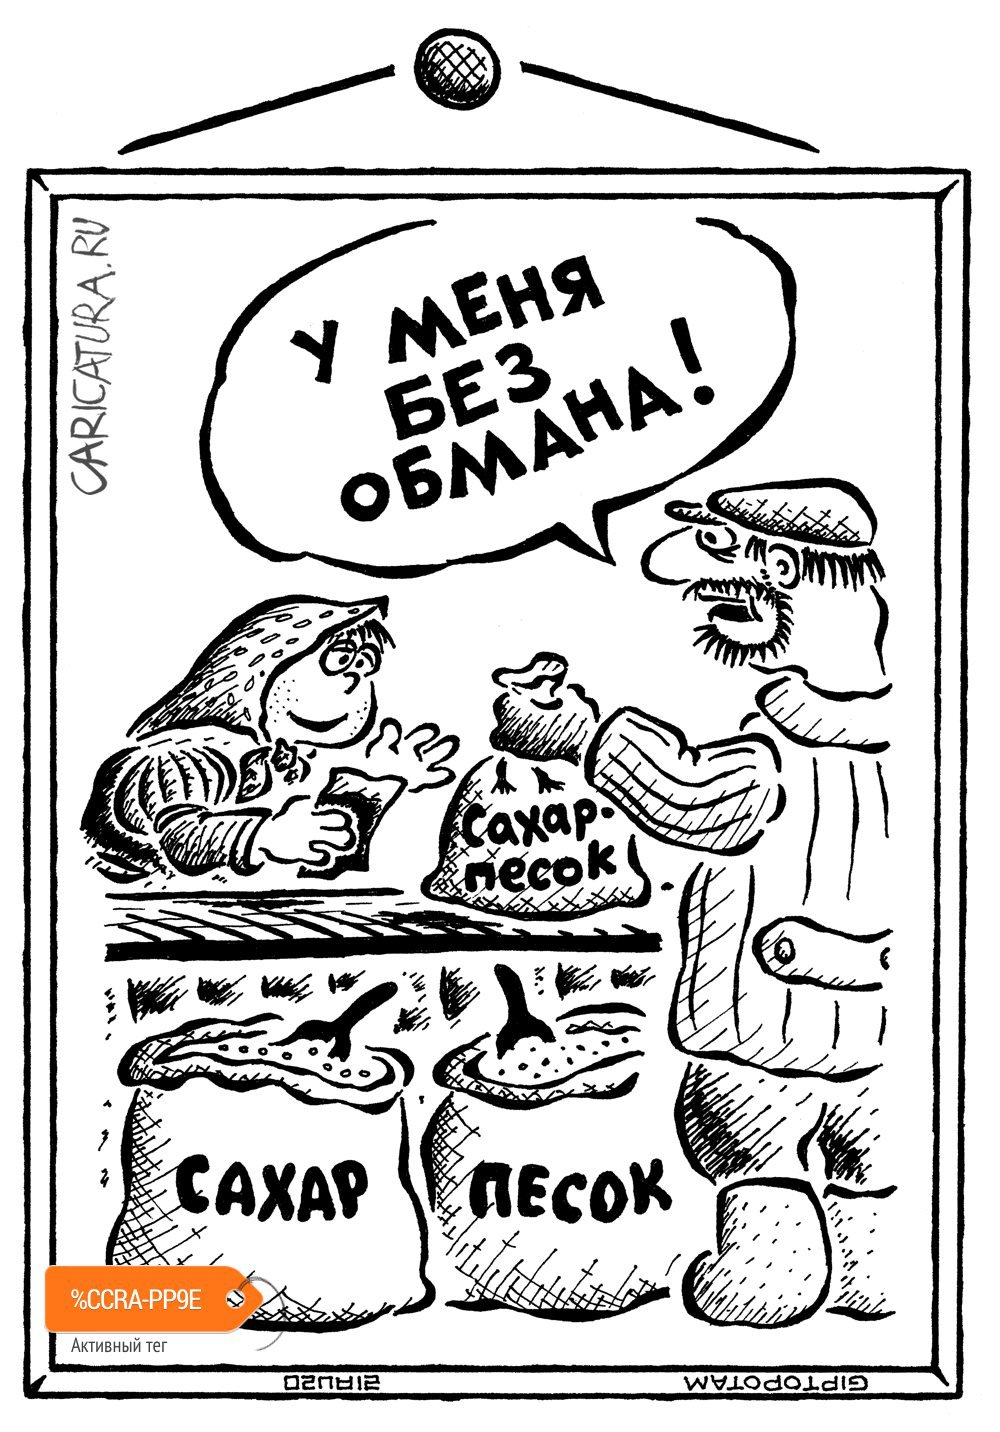 Карикатура "Сахар - белая сме...сь", Александр Евангелистов